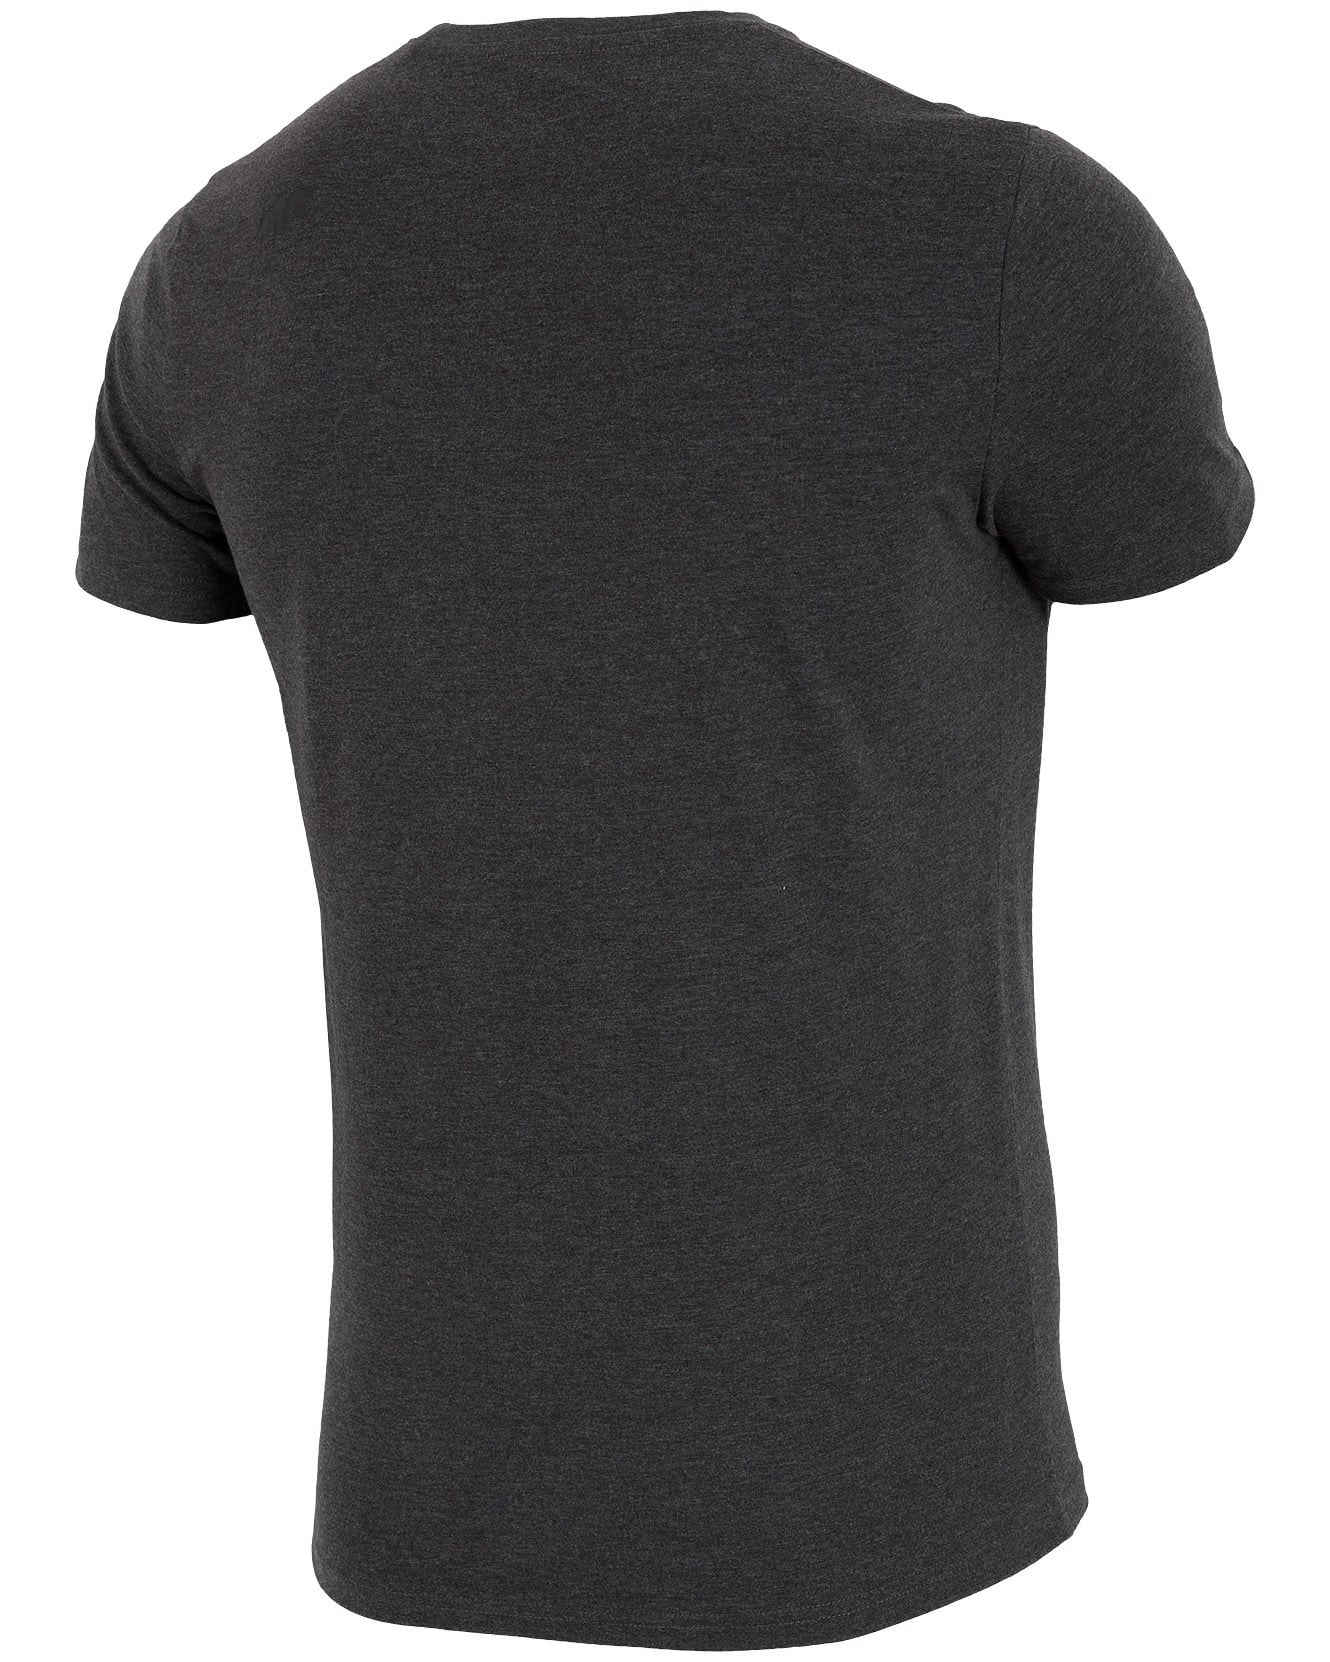 4F T-Shirt - Dark Gray Melange